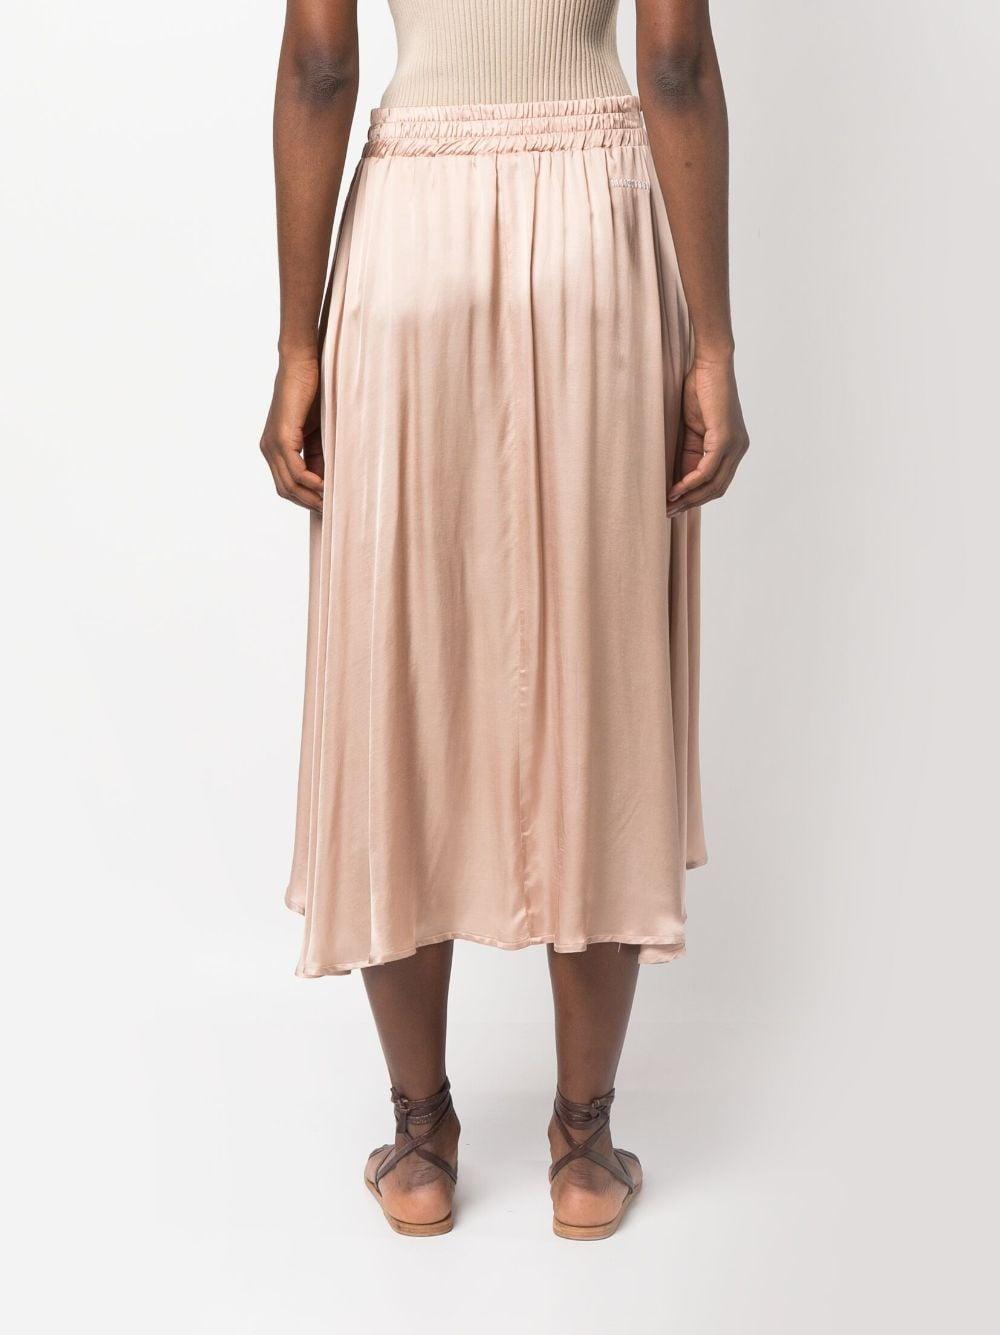 Societe Anonyme Asymmetric Satin Midi Skirt in Pink | Lyst